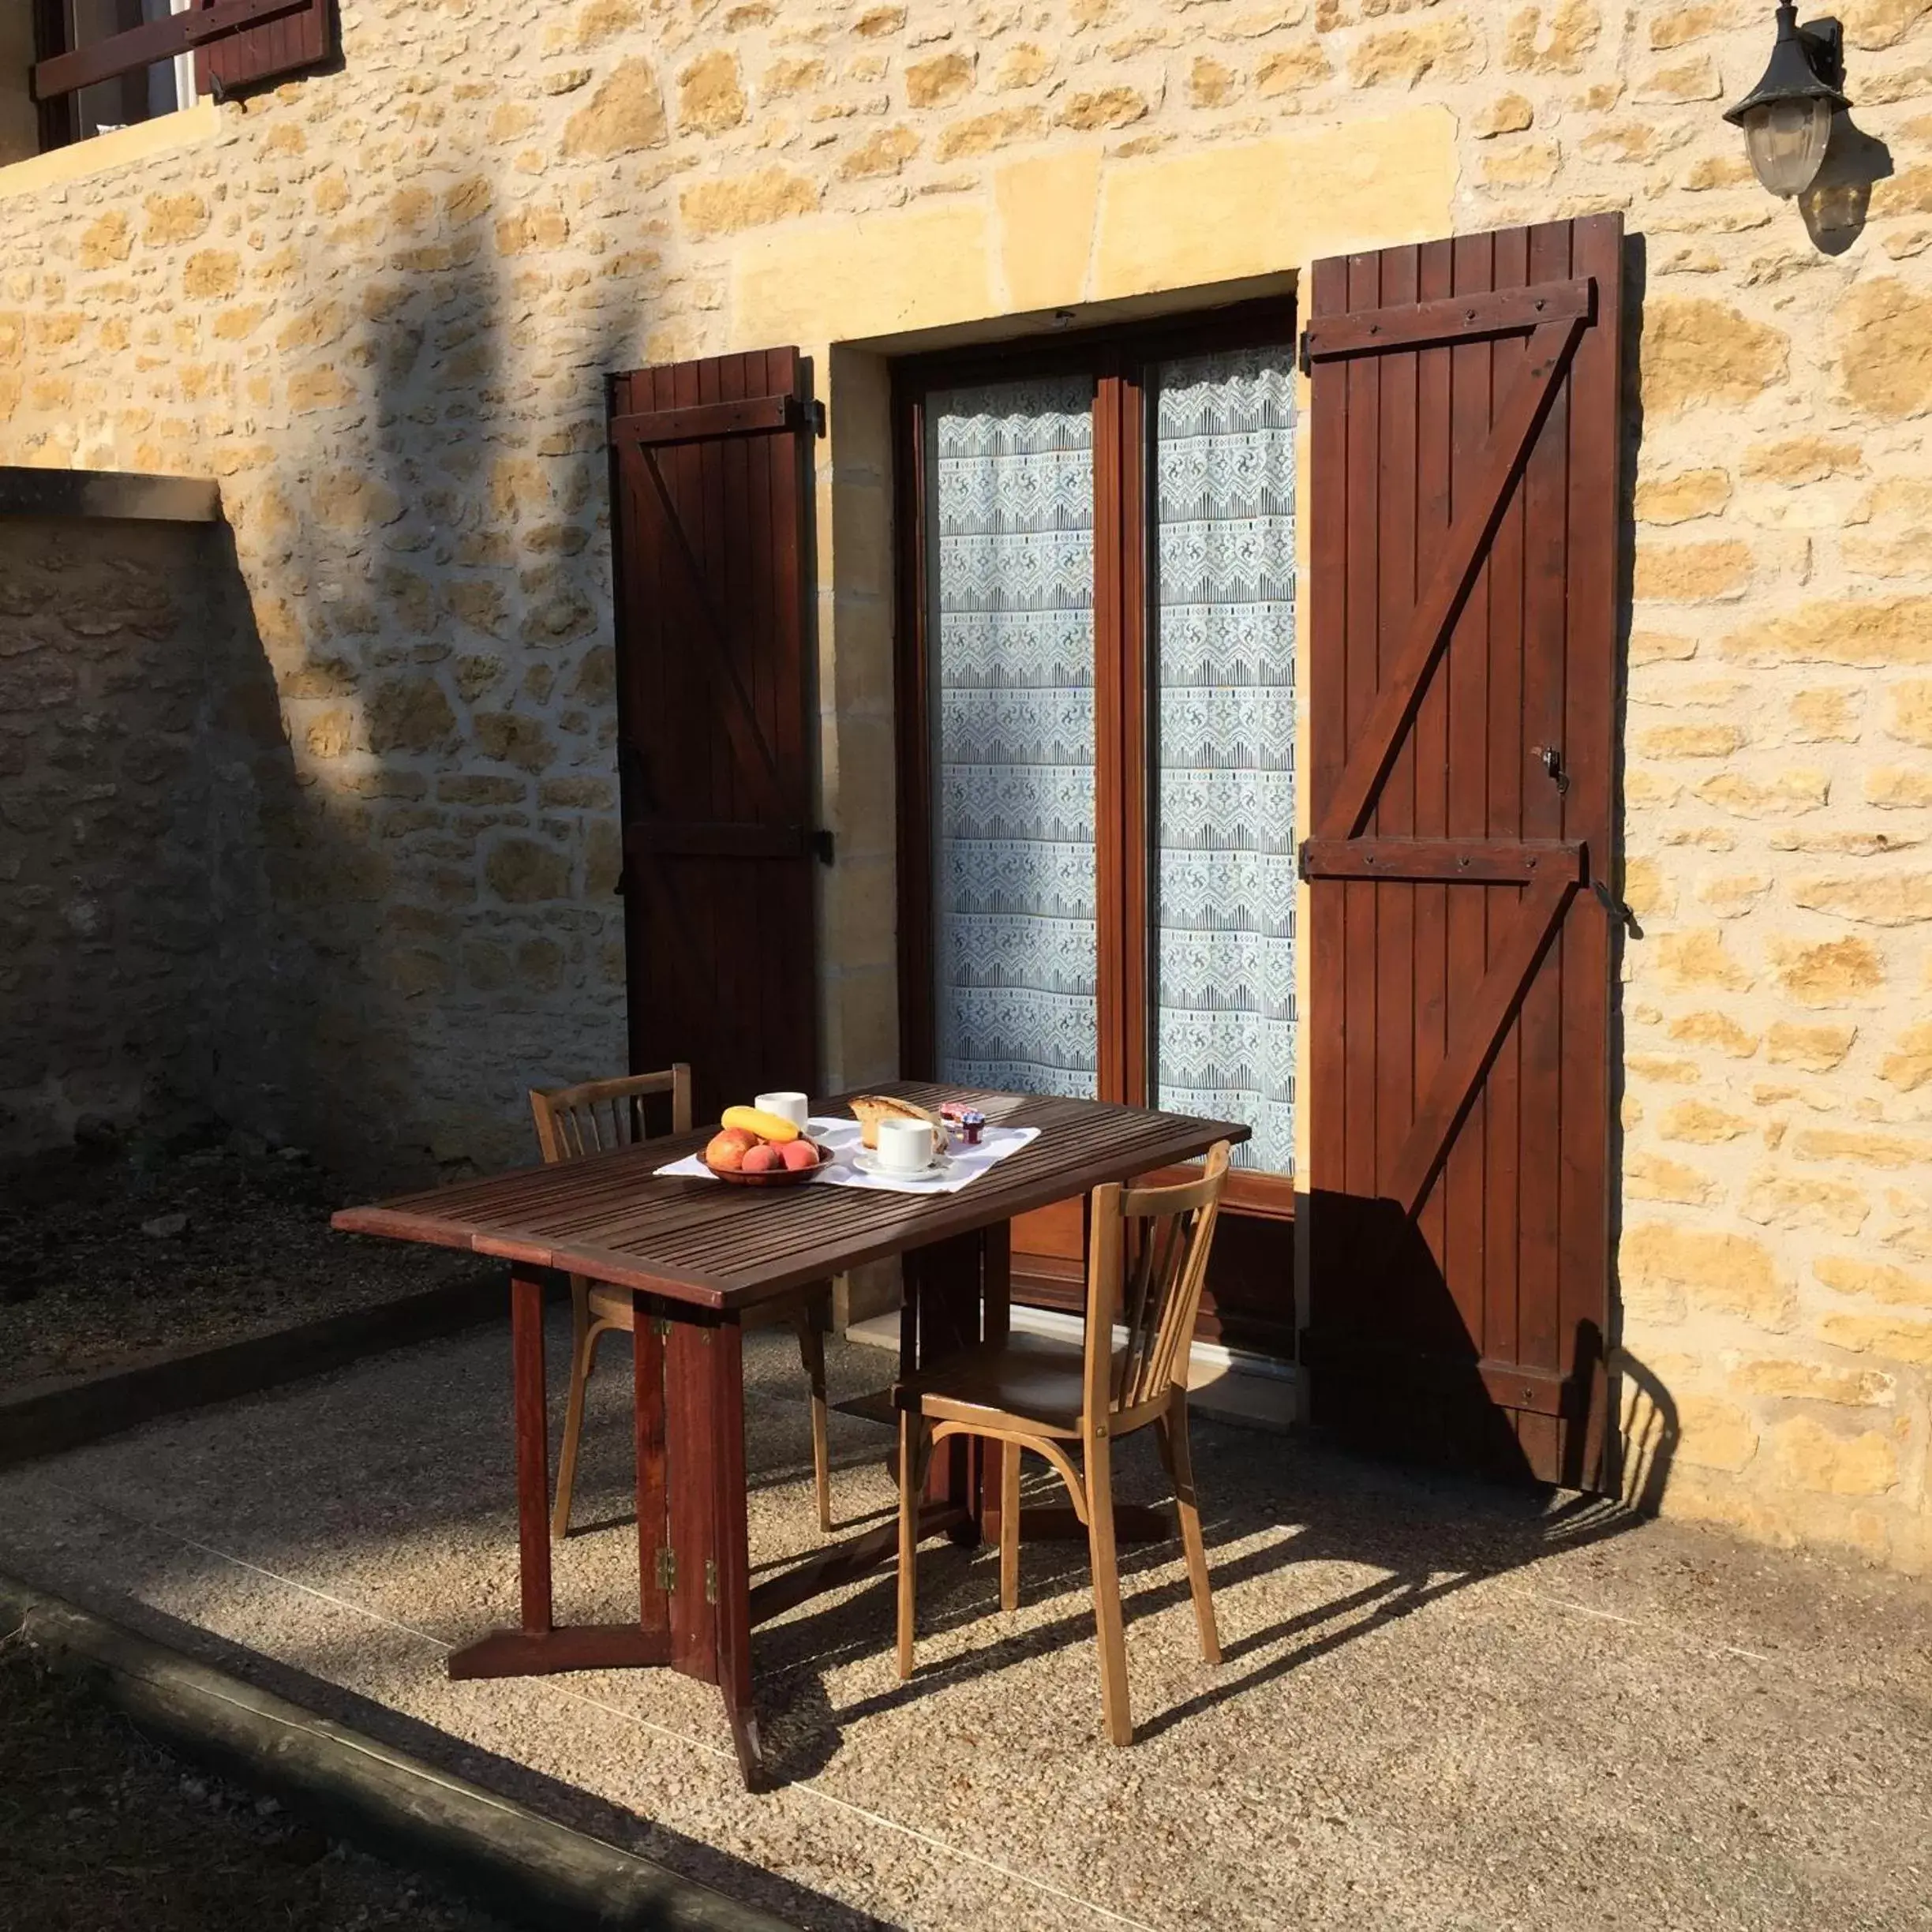 Other, Dining Area in Domaine de Lascaux